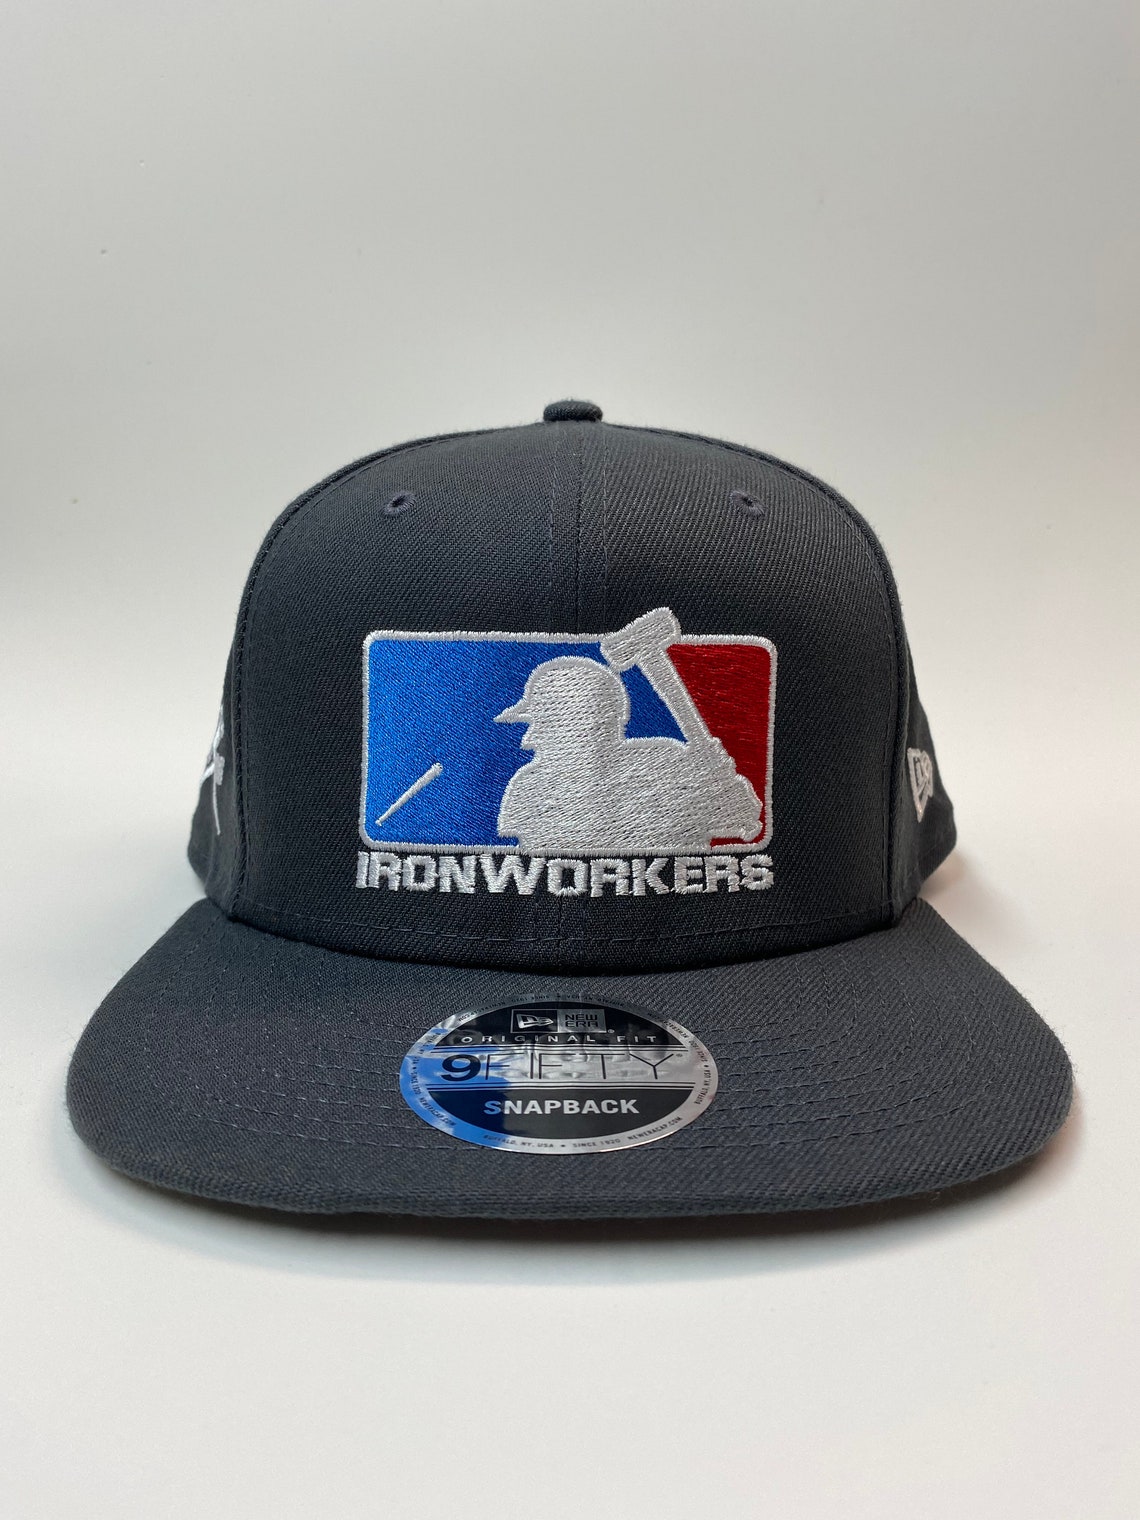 Major League Ironworker 9/50 Snapback hat union trade | Etsy